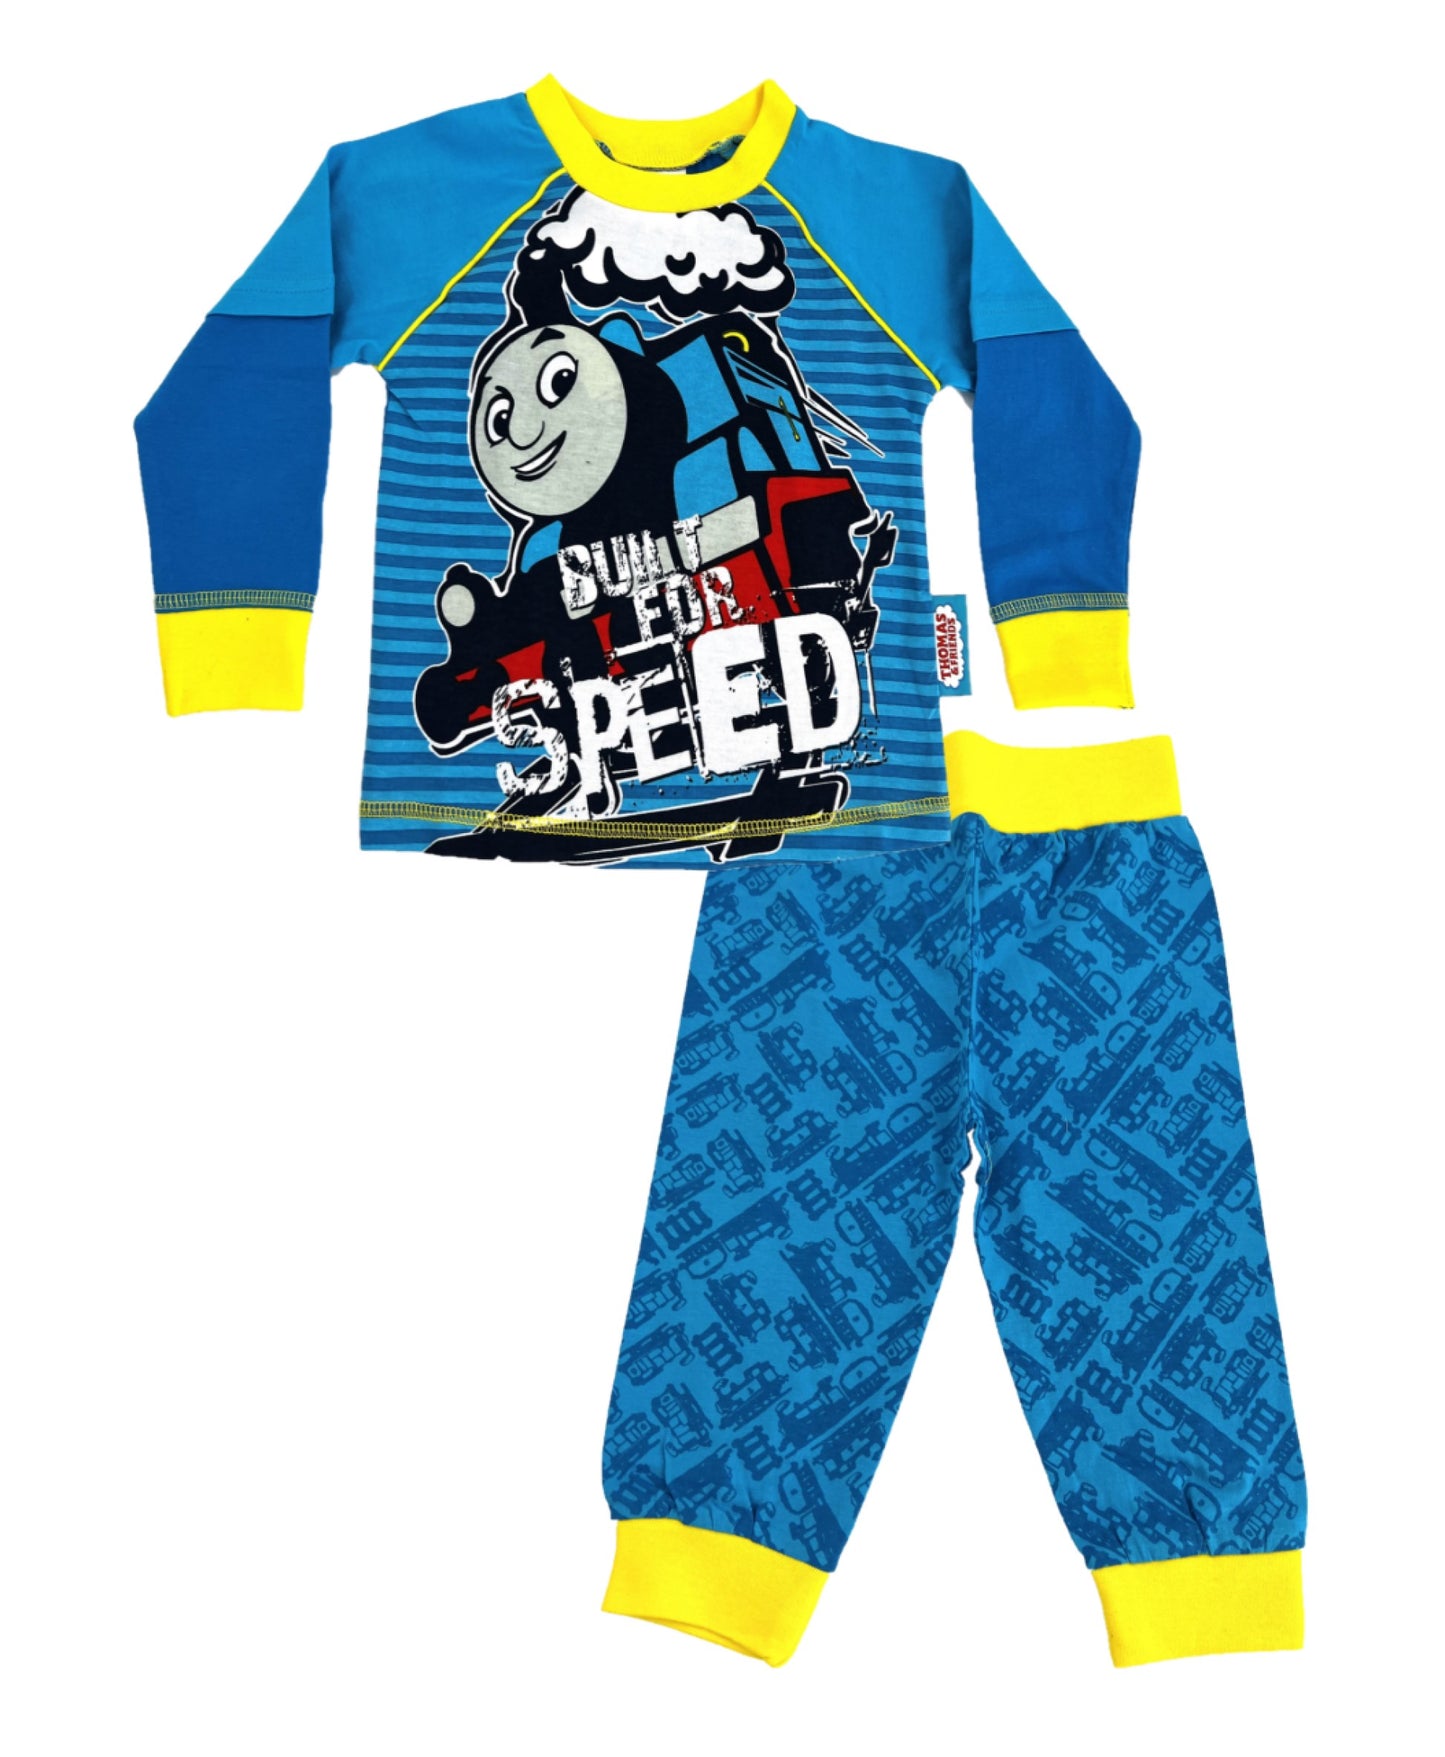 Thomas the Tank Engine "Built for Speed" Toddler Boys' Pure Cotton Pyjamas